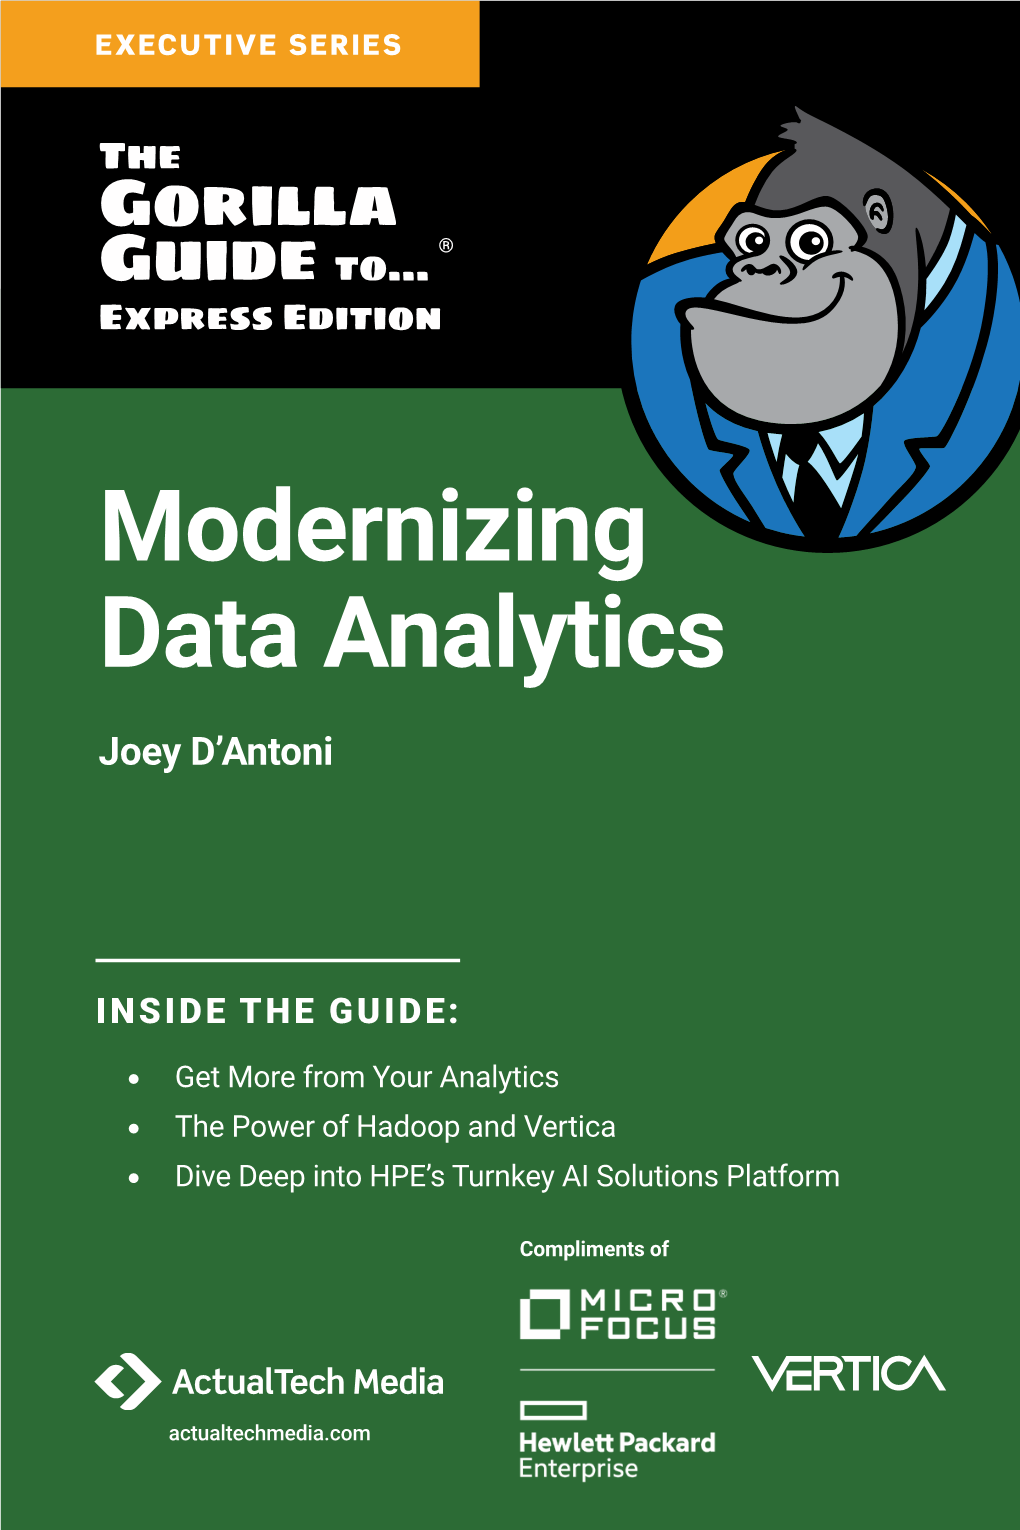 The Gorilla Guide To…® (Express Edition) Modernizing Data Analytics